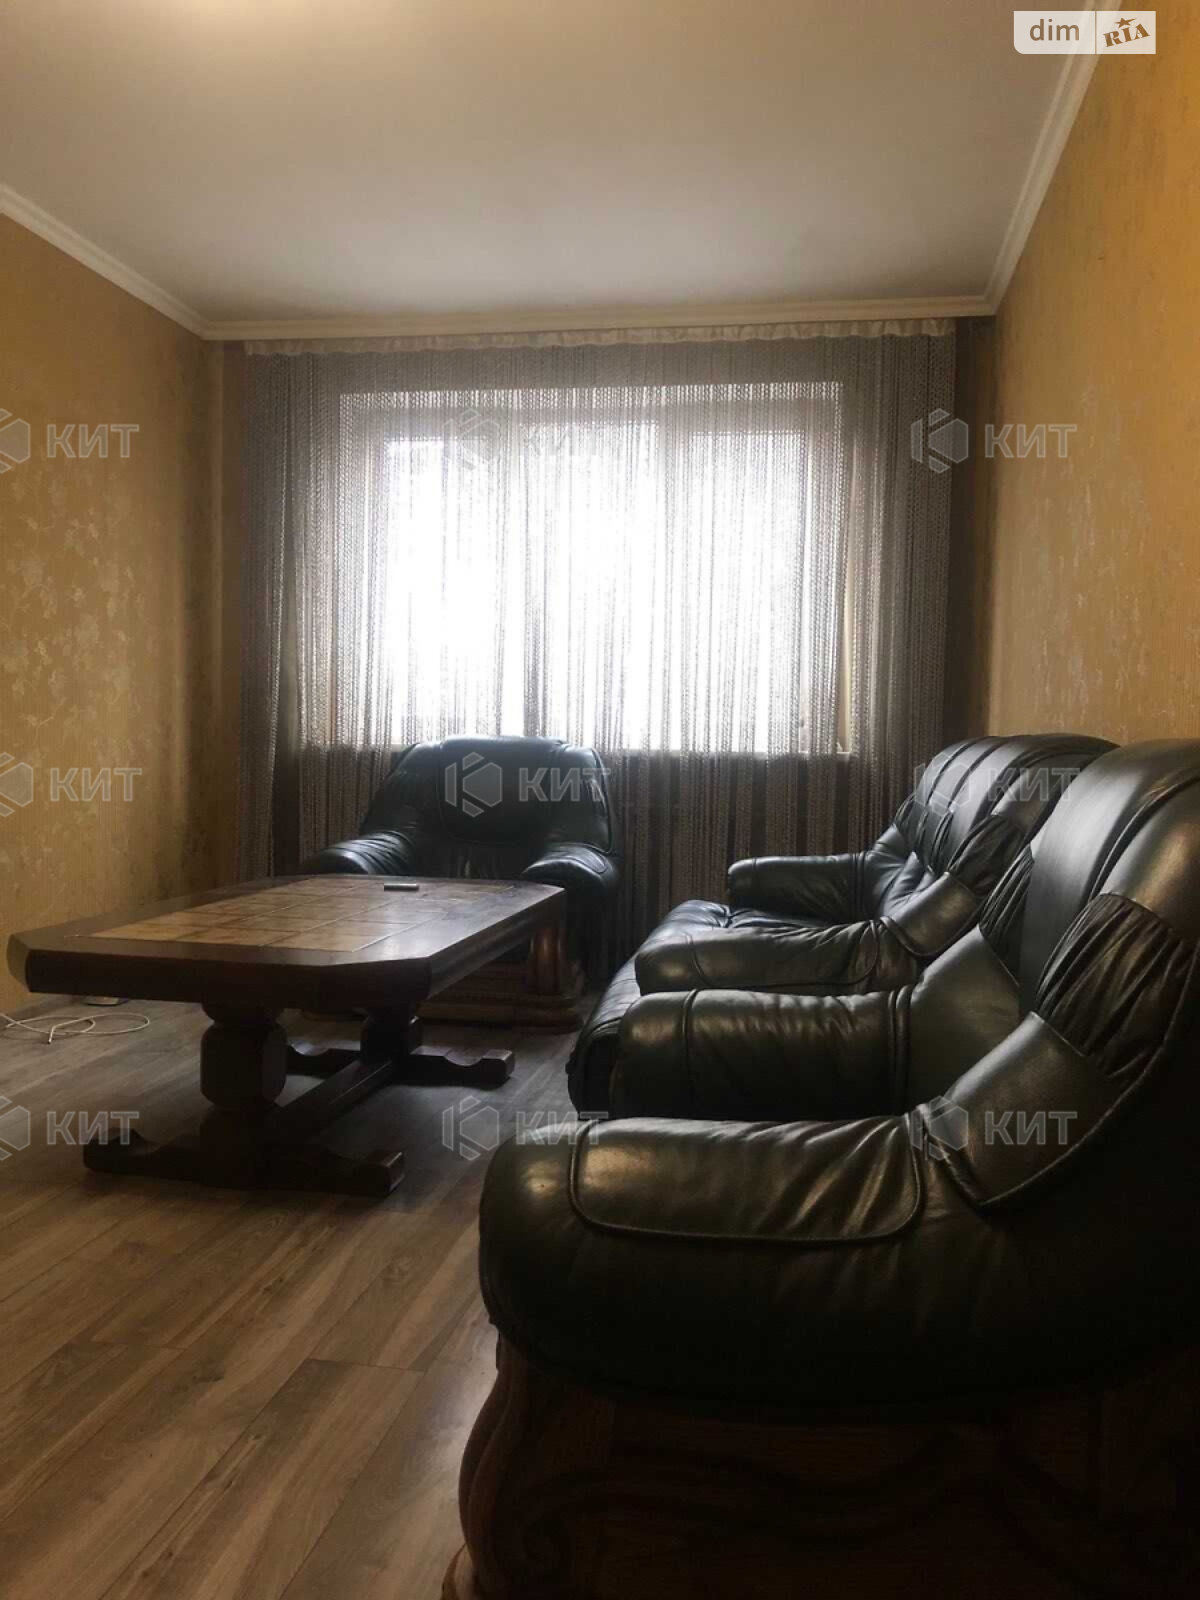 Продажа трехкомнатной квартиры в Харькове, на ул. Чугуевская 27, район Центр фото 1